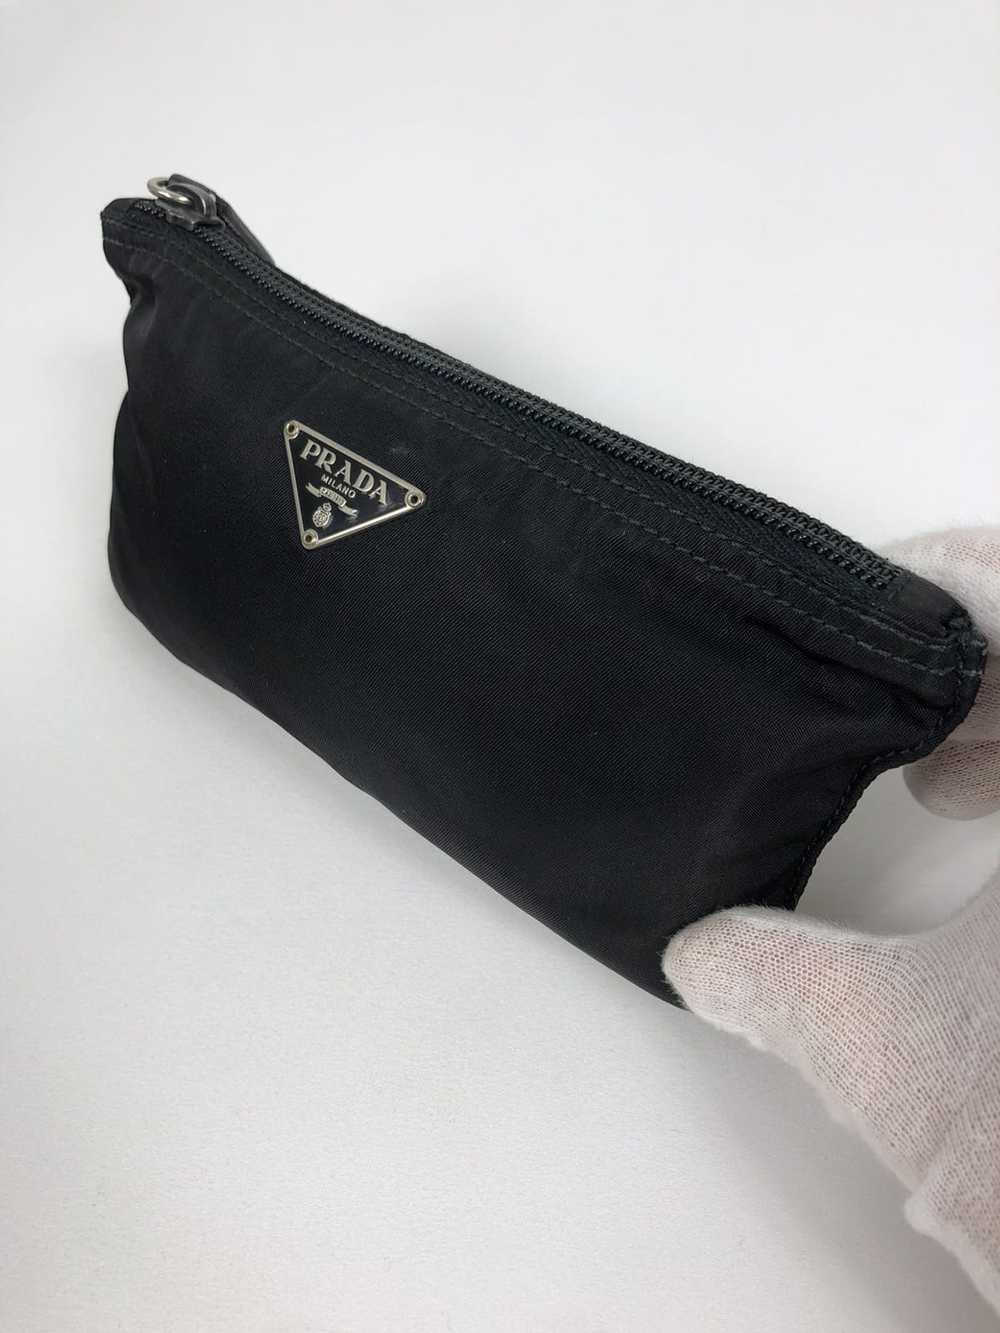 Prada Prada tessuto nero nylon cosmetic pouch - image 1